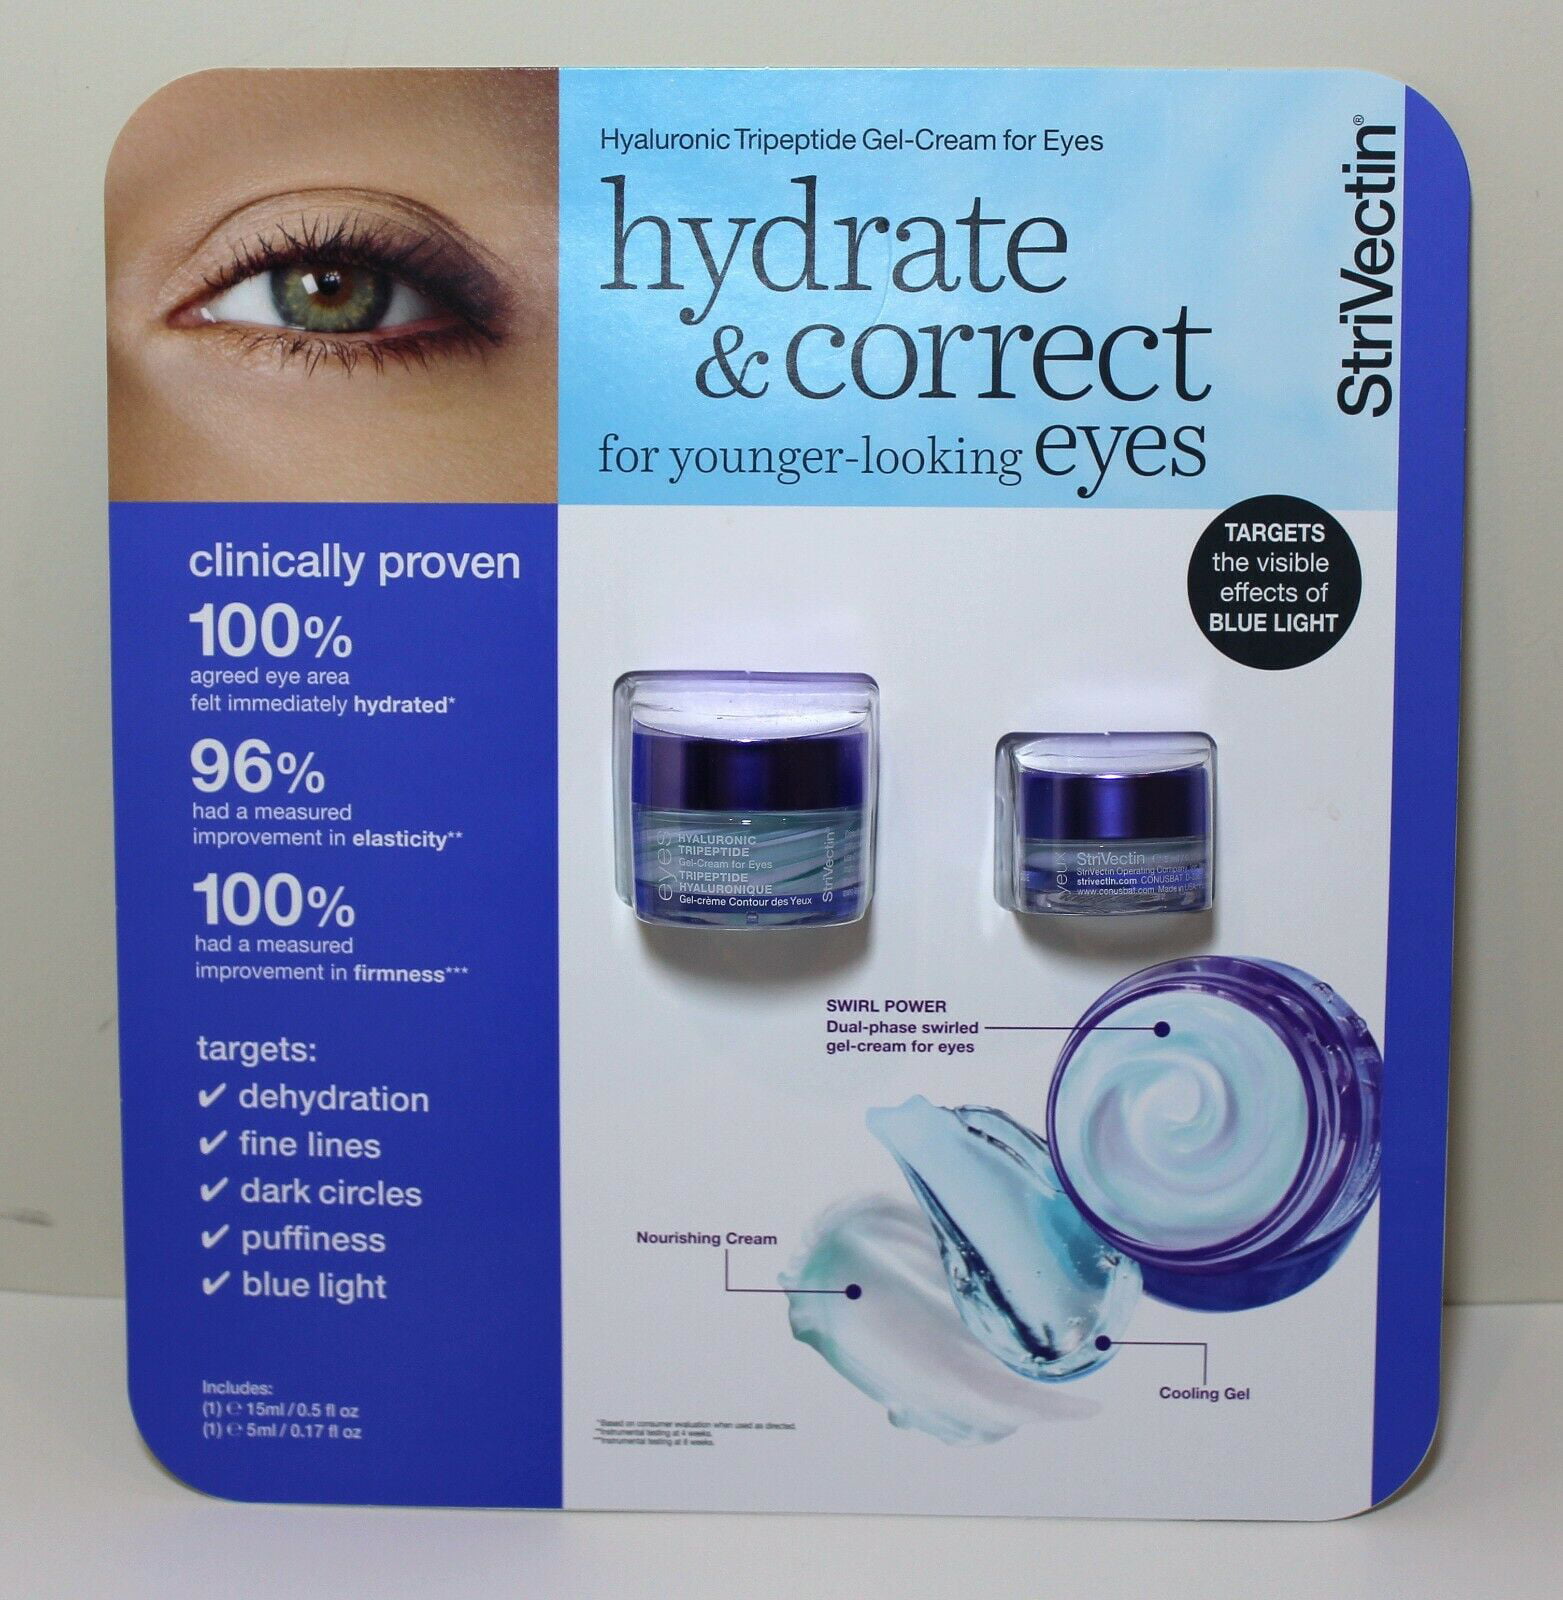 StriVectin Gel-Cream Tripeptide 2-pack Hyaluronic Eyes, for